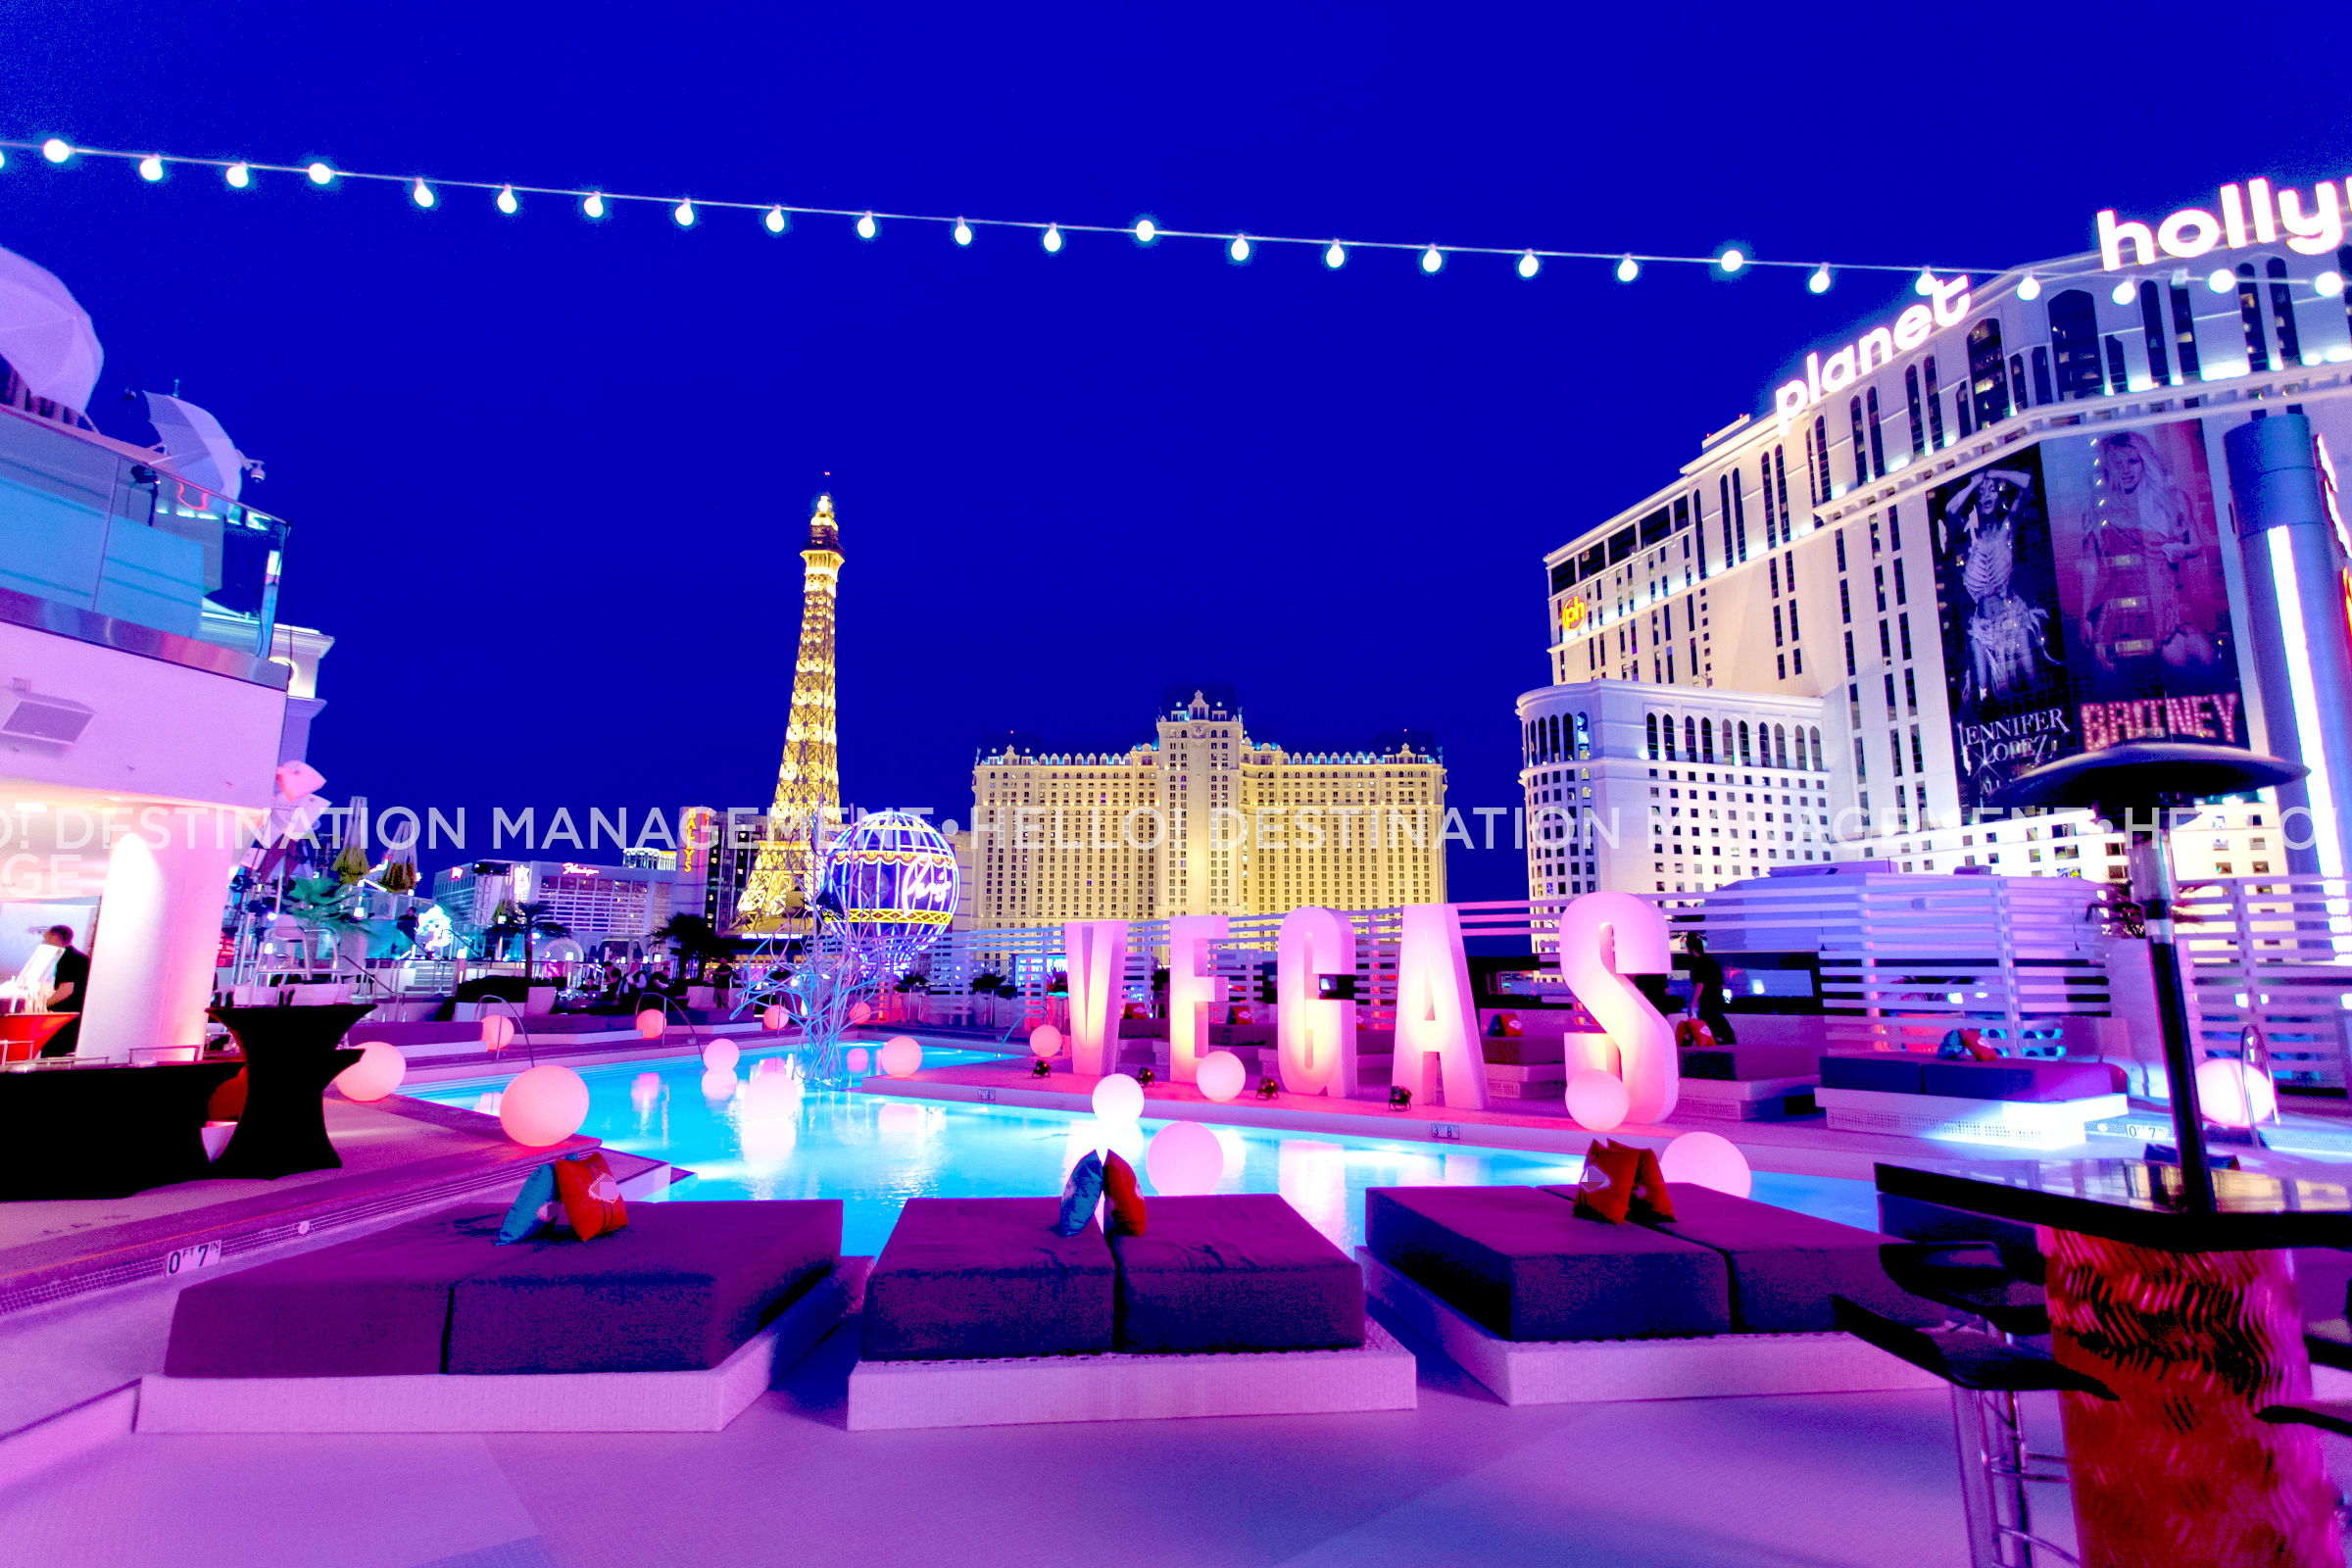 A Vegas Hangover Pool Hello! Destination Management